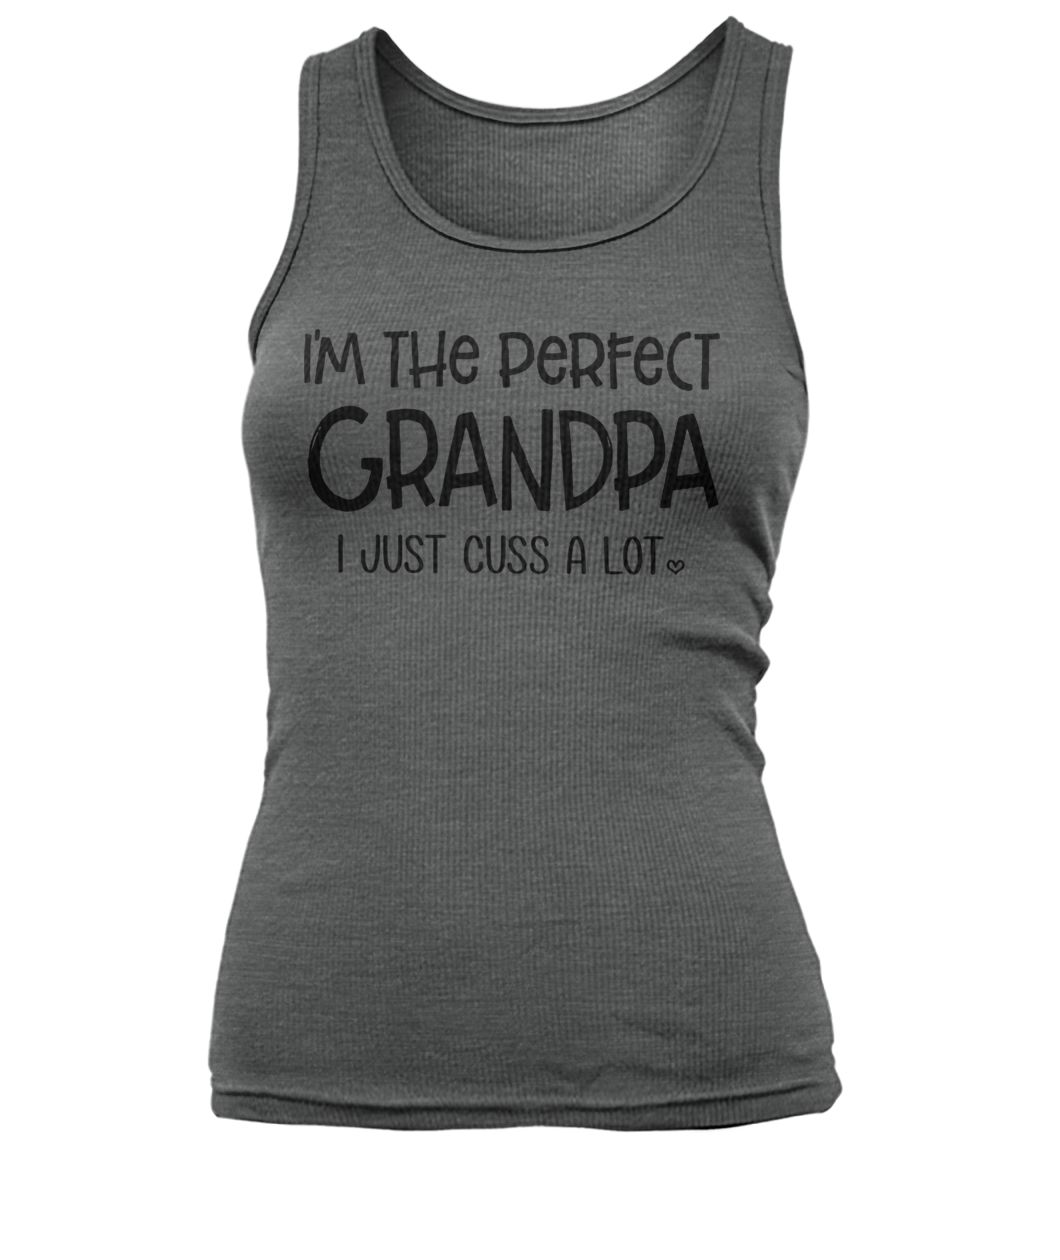 I'm the perfect grandpa I just cuss a lot women's tank top